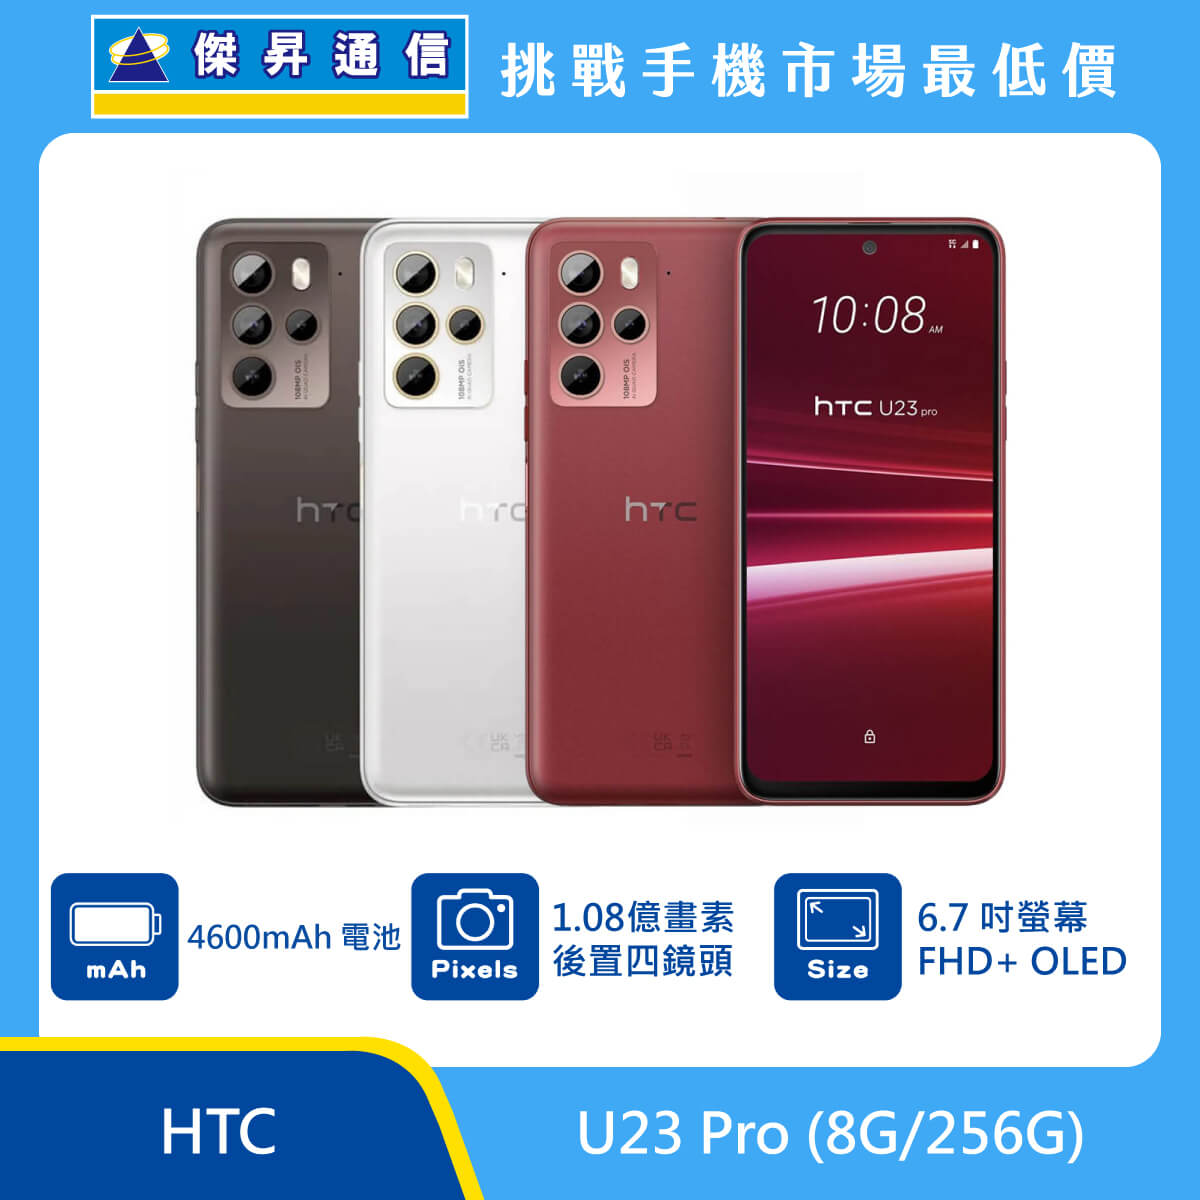 HTC U23 Pro (8G/256G)